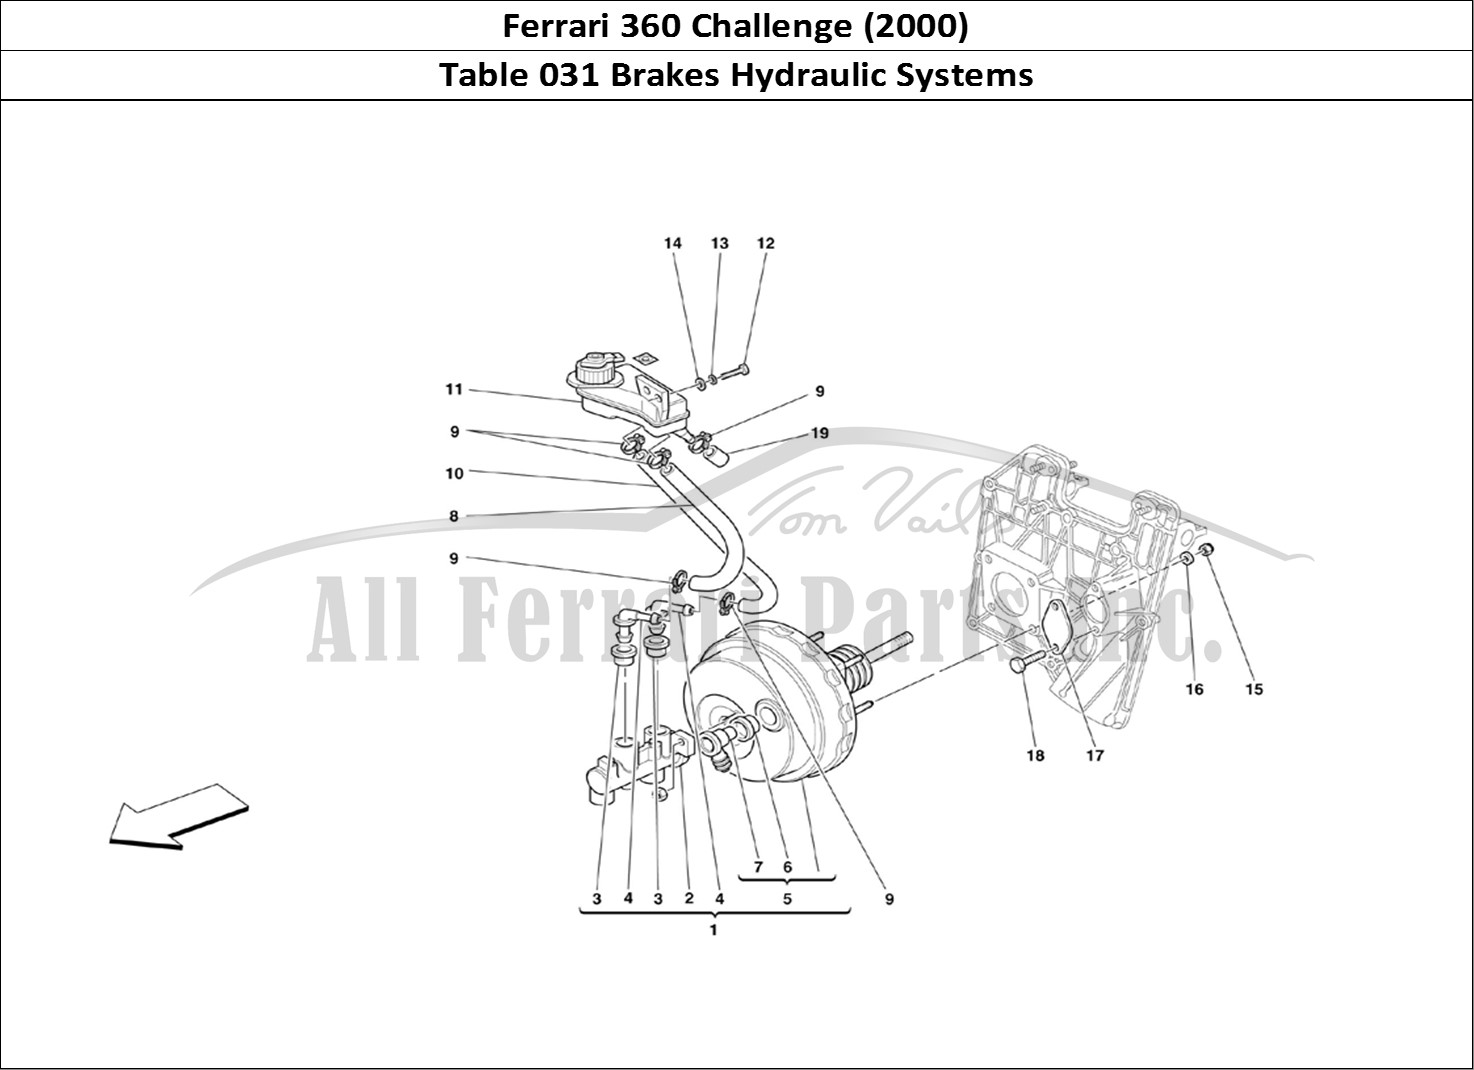 Ferrari Parts Ferrari 360 Challenge (2000) Page 031 Brakes Hydraulic Controls